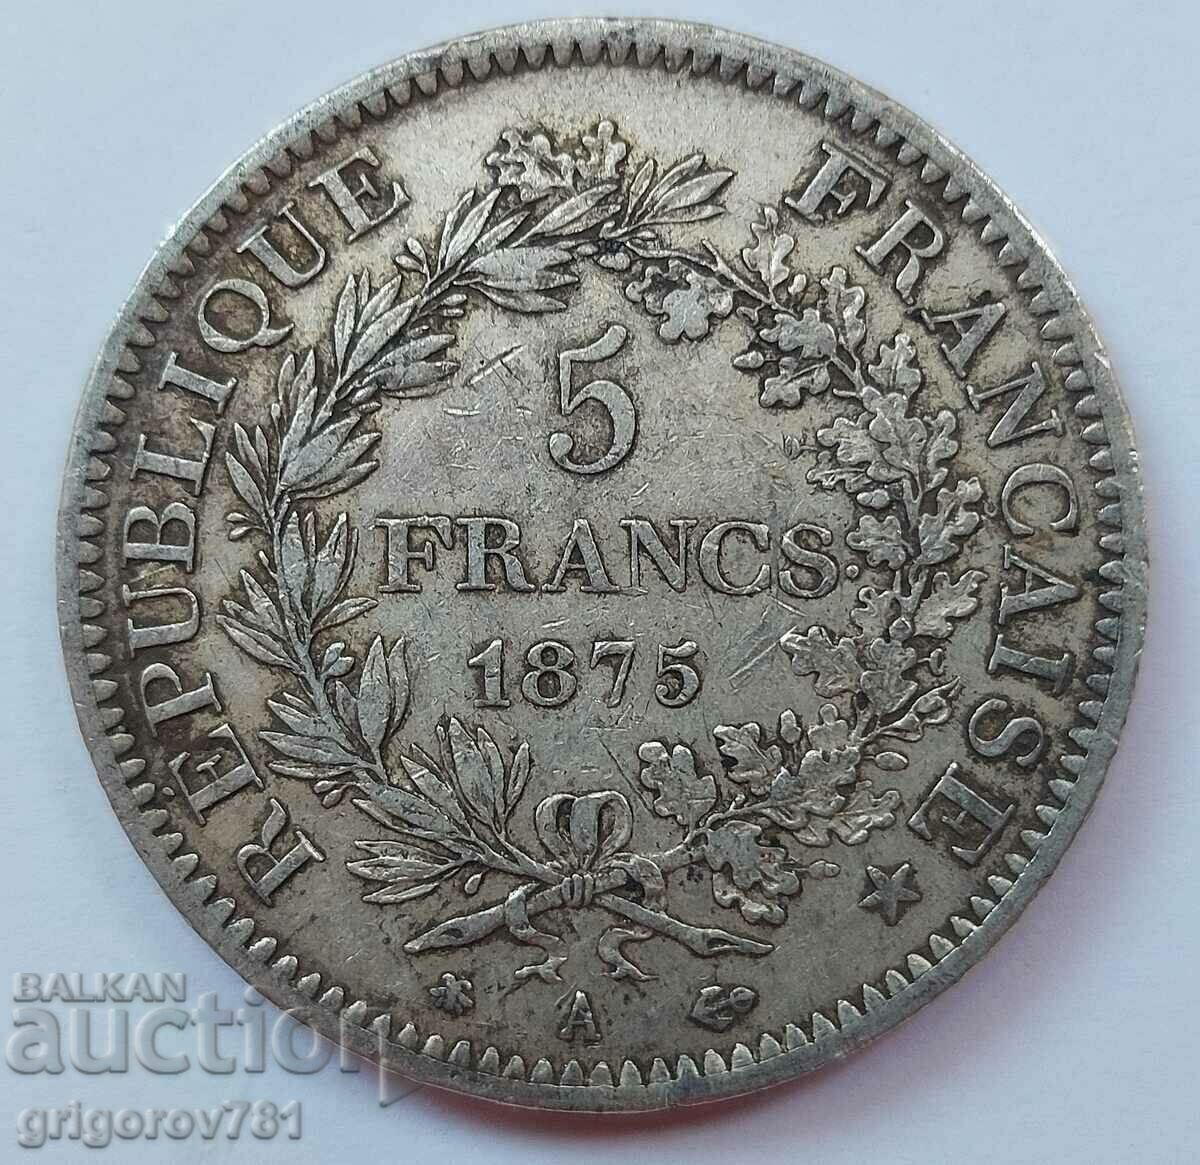 5 francs silver France 1875 A silver coin # 19